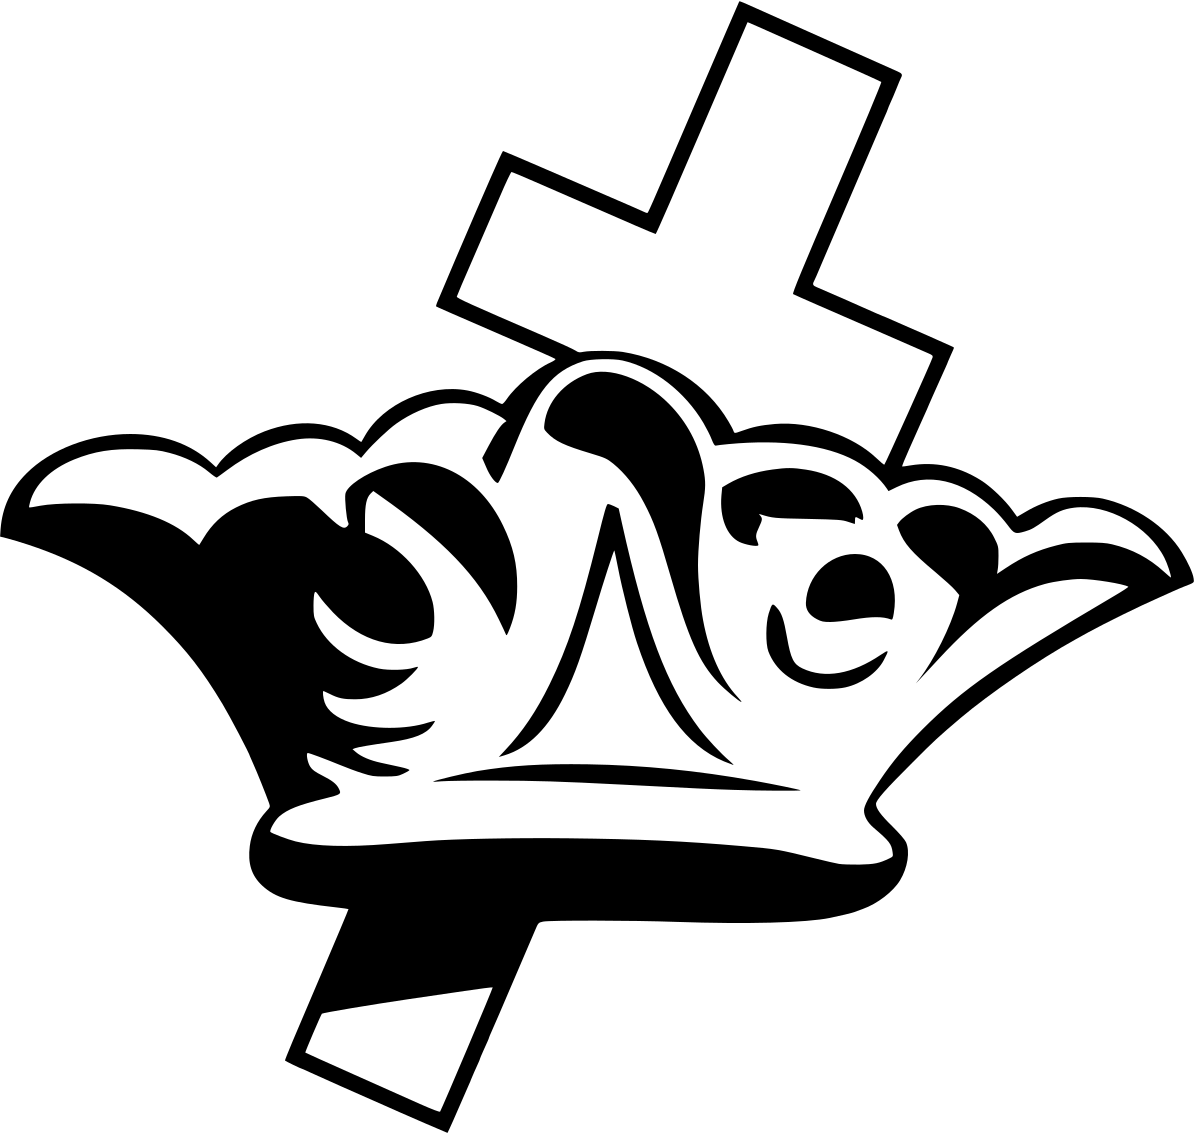 Cross and Crown - Wikipedia